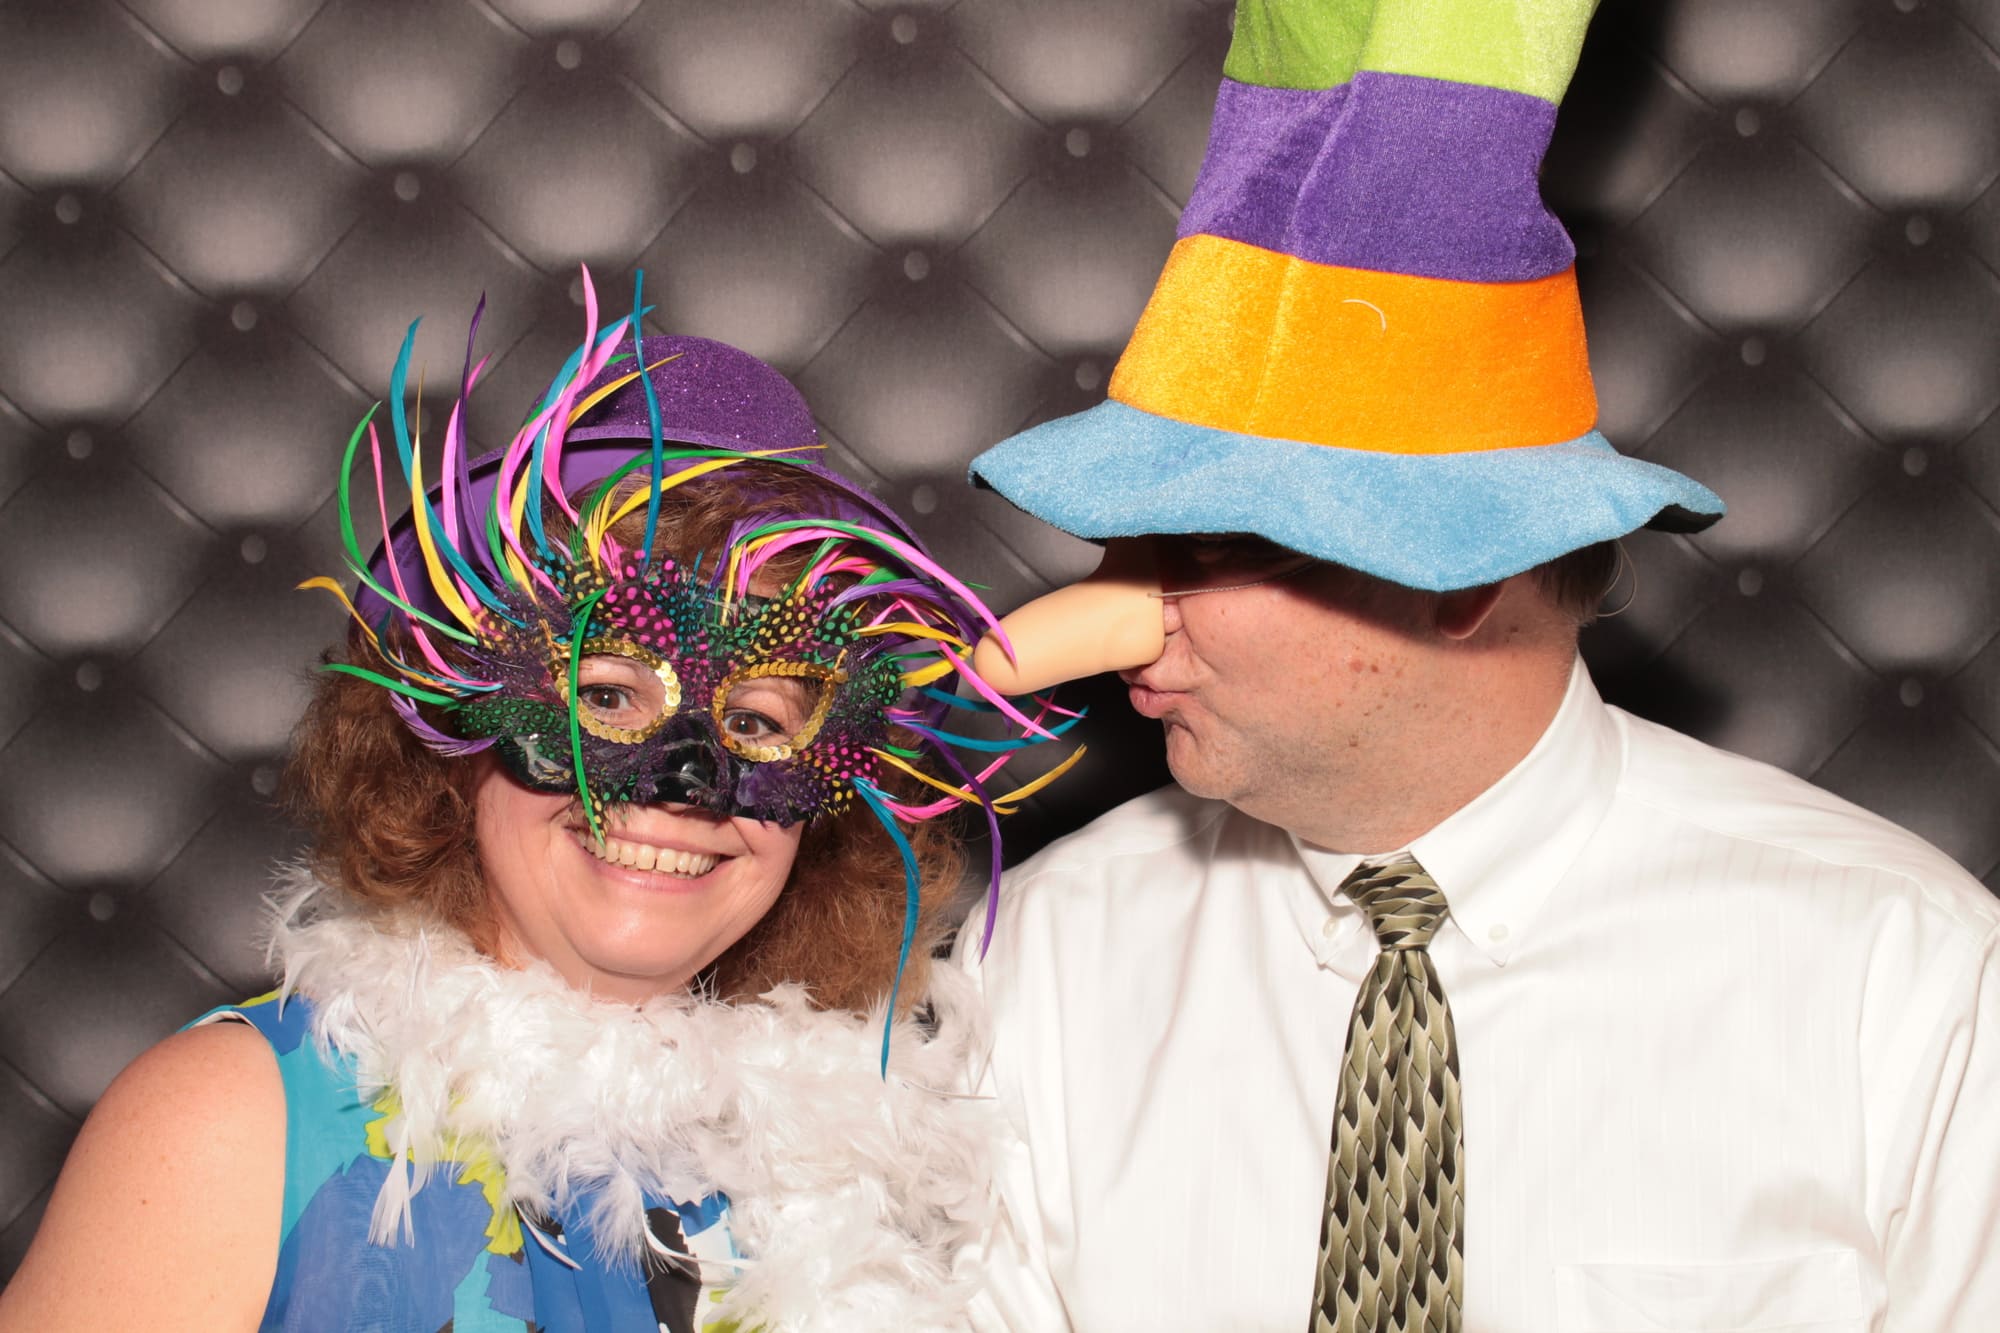 Wedding-Party-Photo Booth Rental-Memories-Props-No. 1-Popular-Best-Austin-Church-Reception-Fun